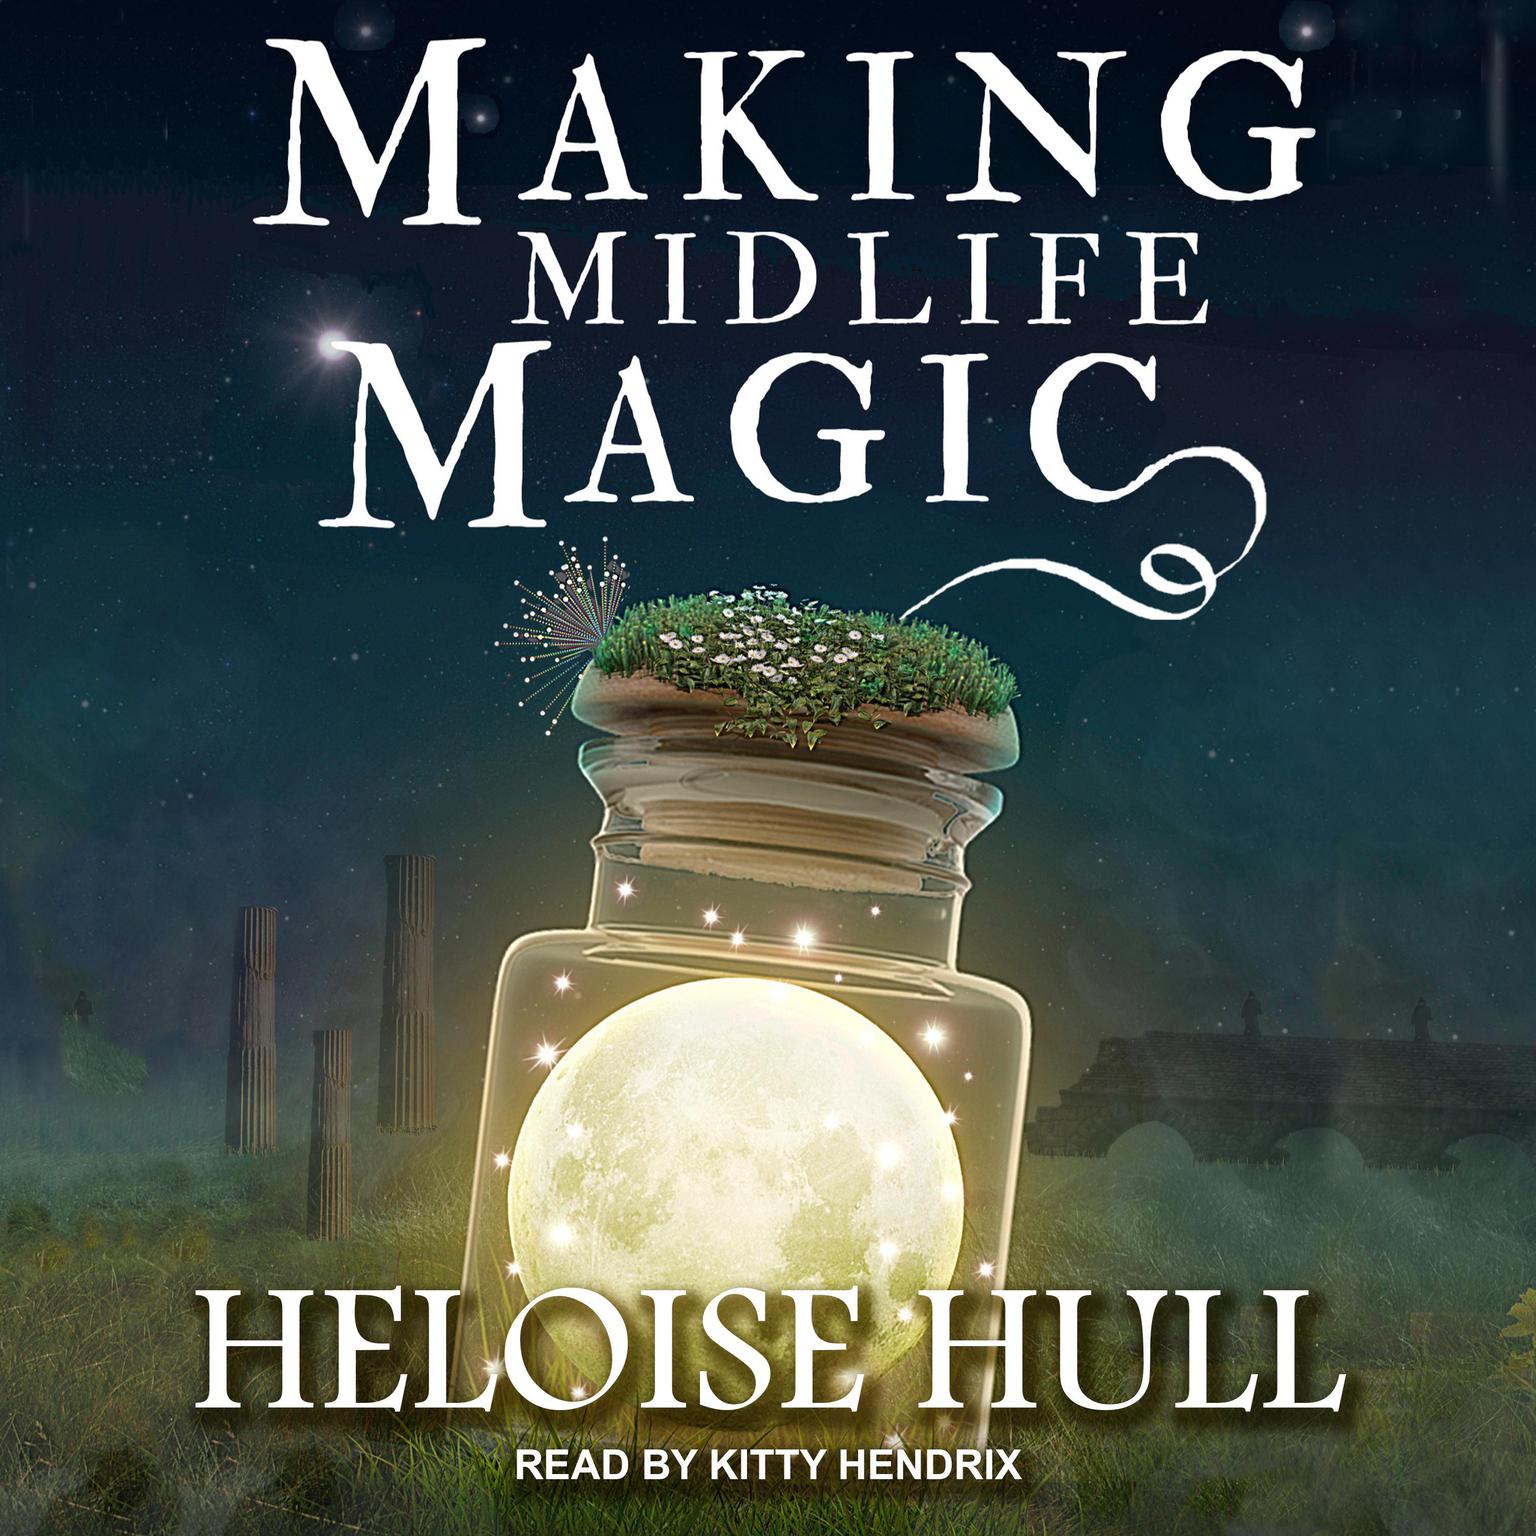 Making Midlife Magic Audiobook, by Heloise Hull